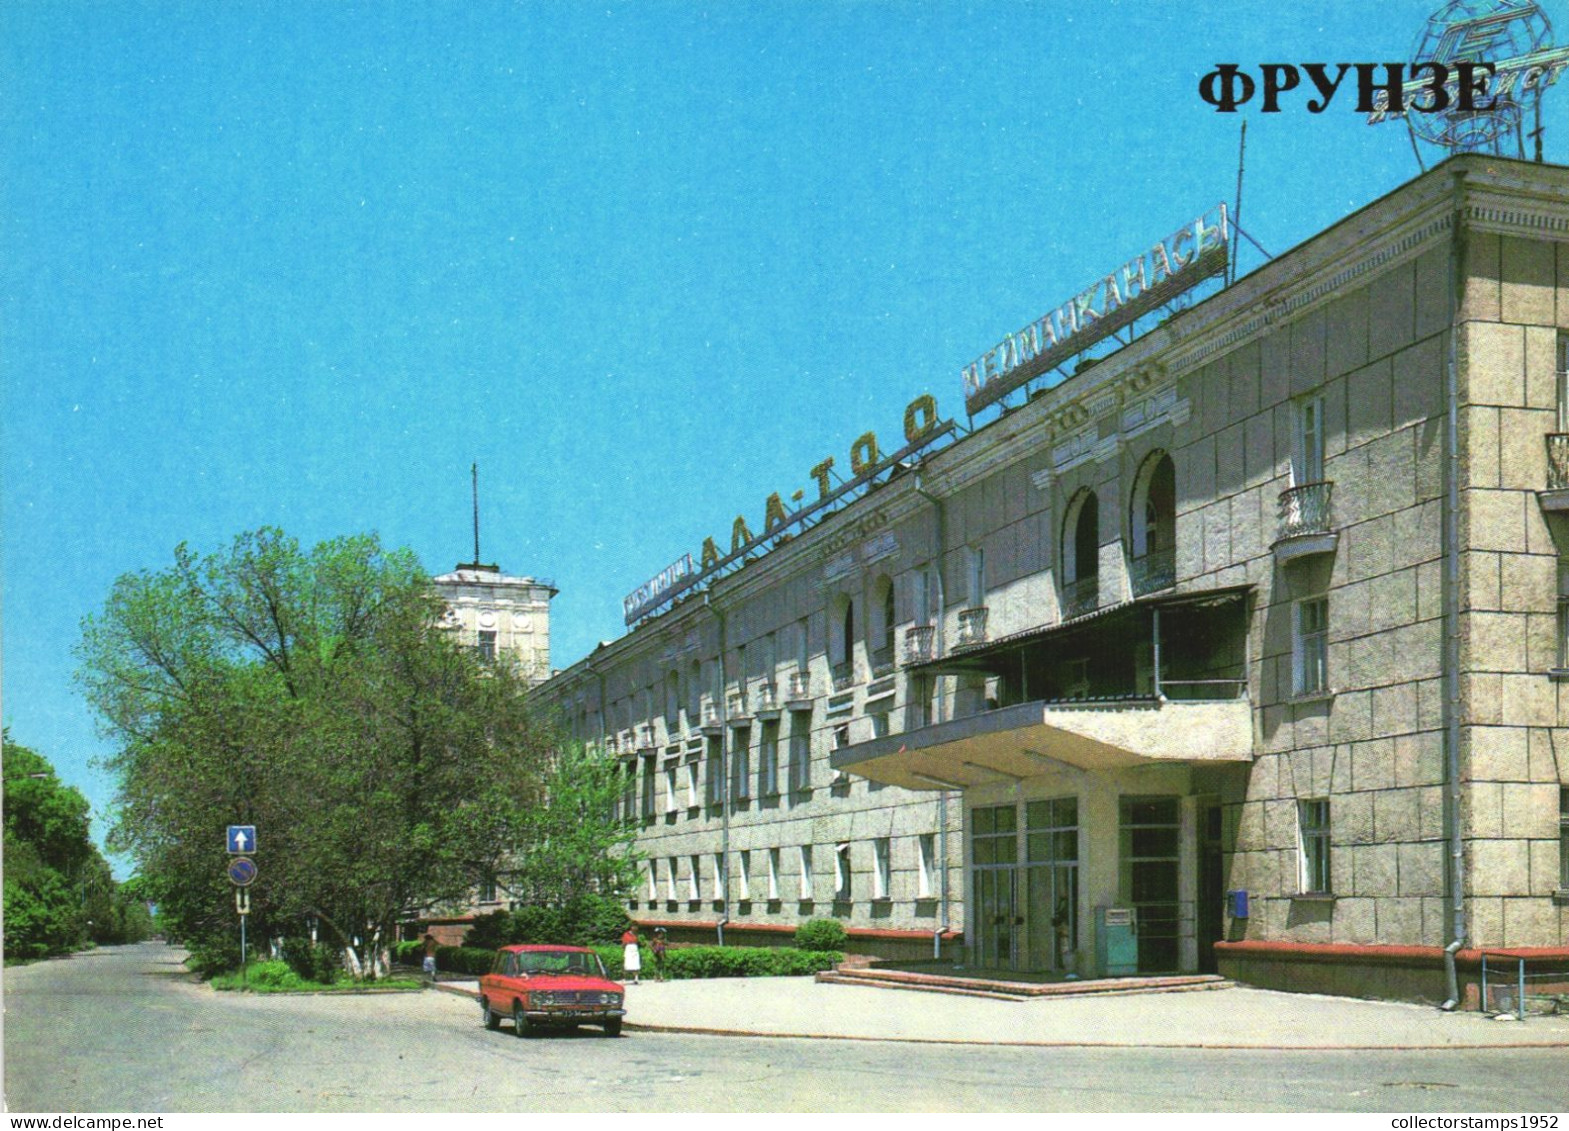 BYSHKEK, FRUNZE, HOTEL, CAR, ARCHITECTURE, KYRGYZSTAN, POSTCARD - Kyrgyzstan